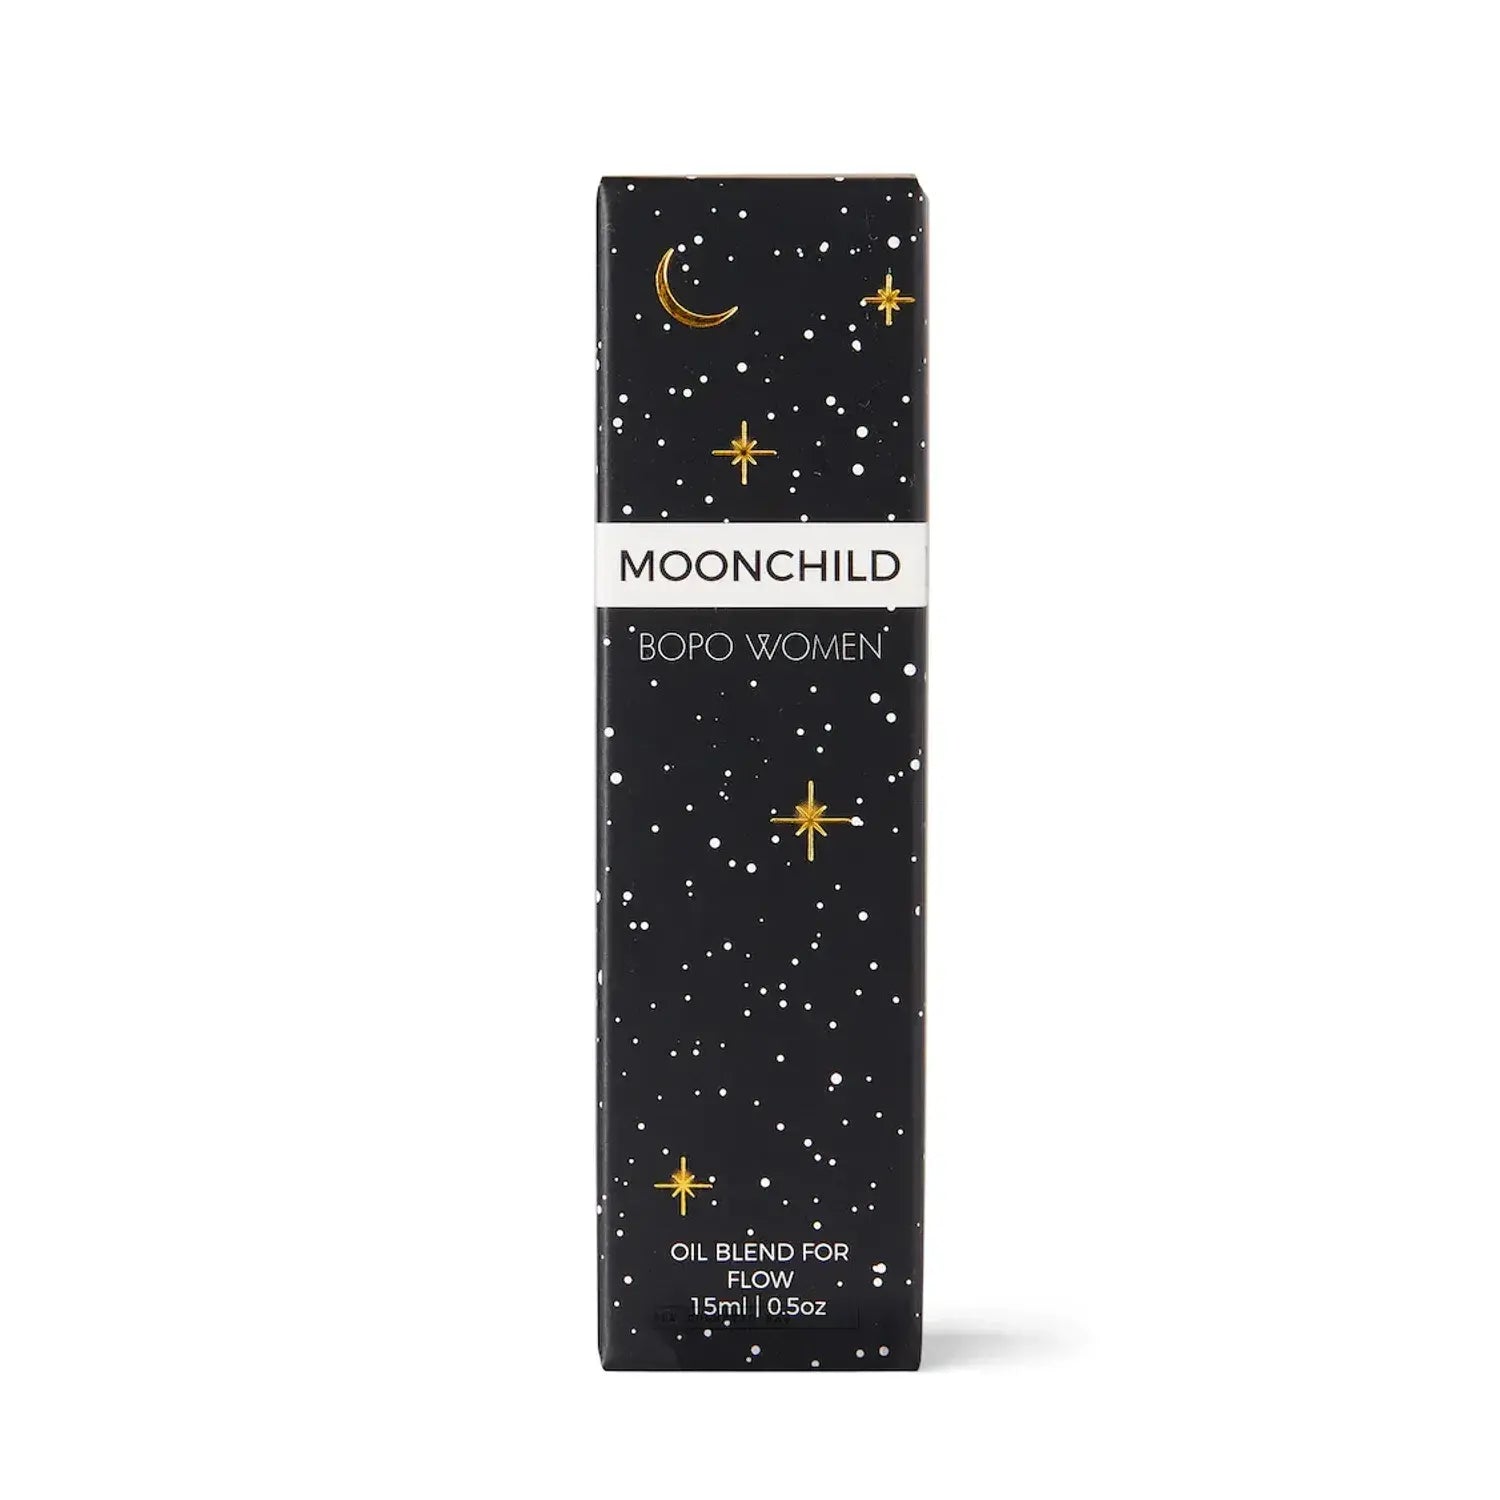 Moonchild Obsidian Crystal Infused Perfume Roller by Bopo Women